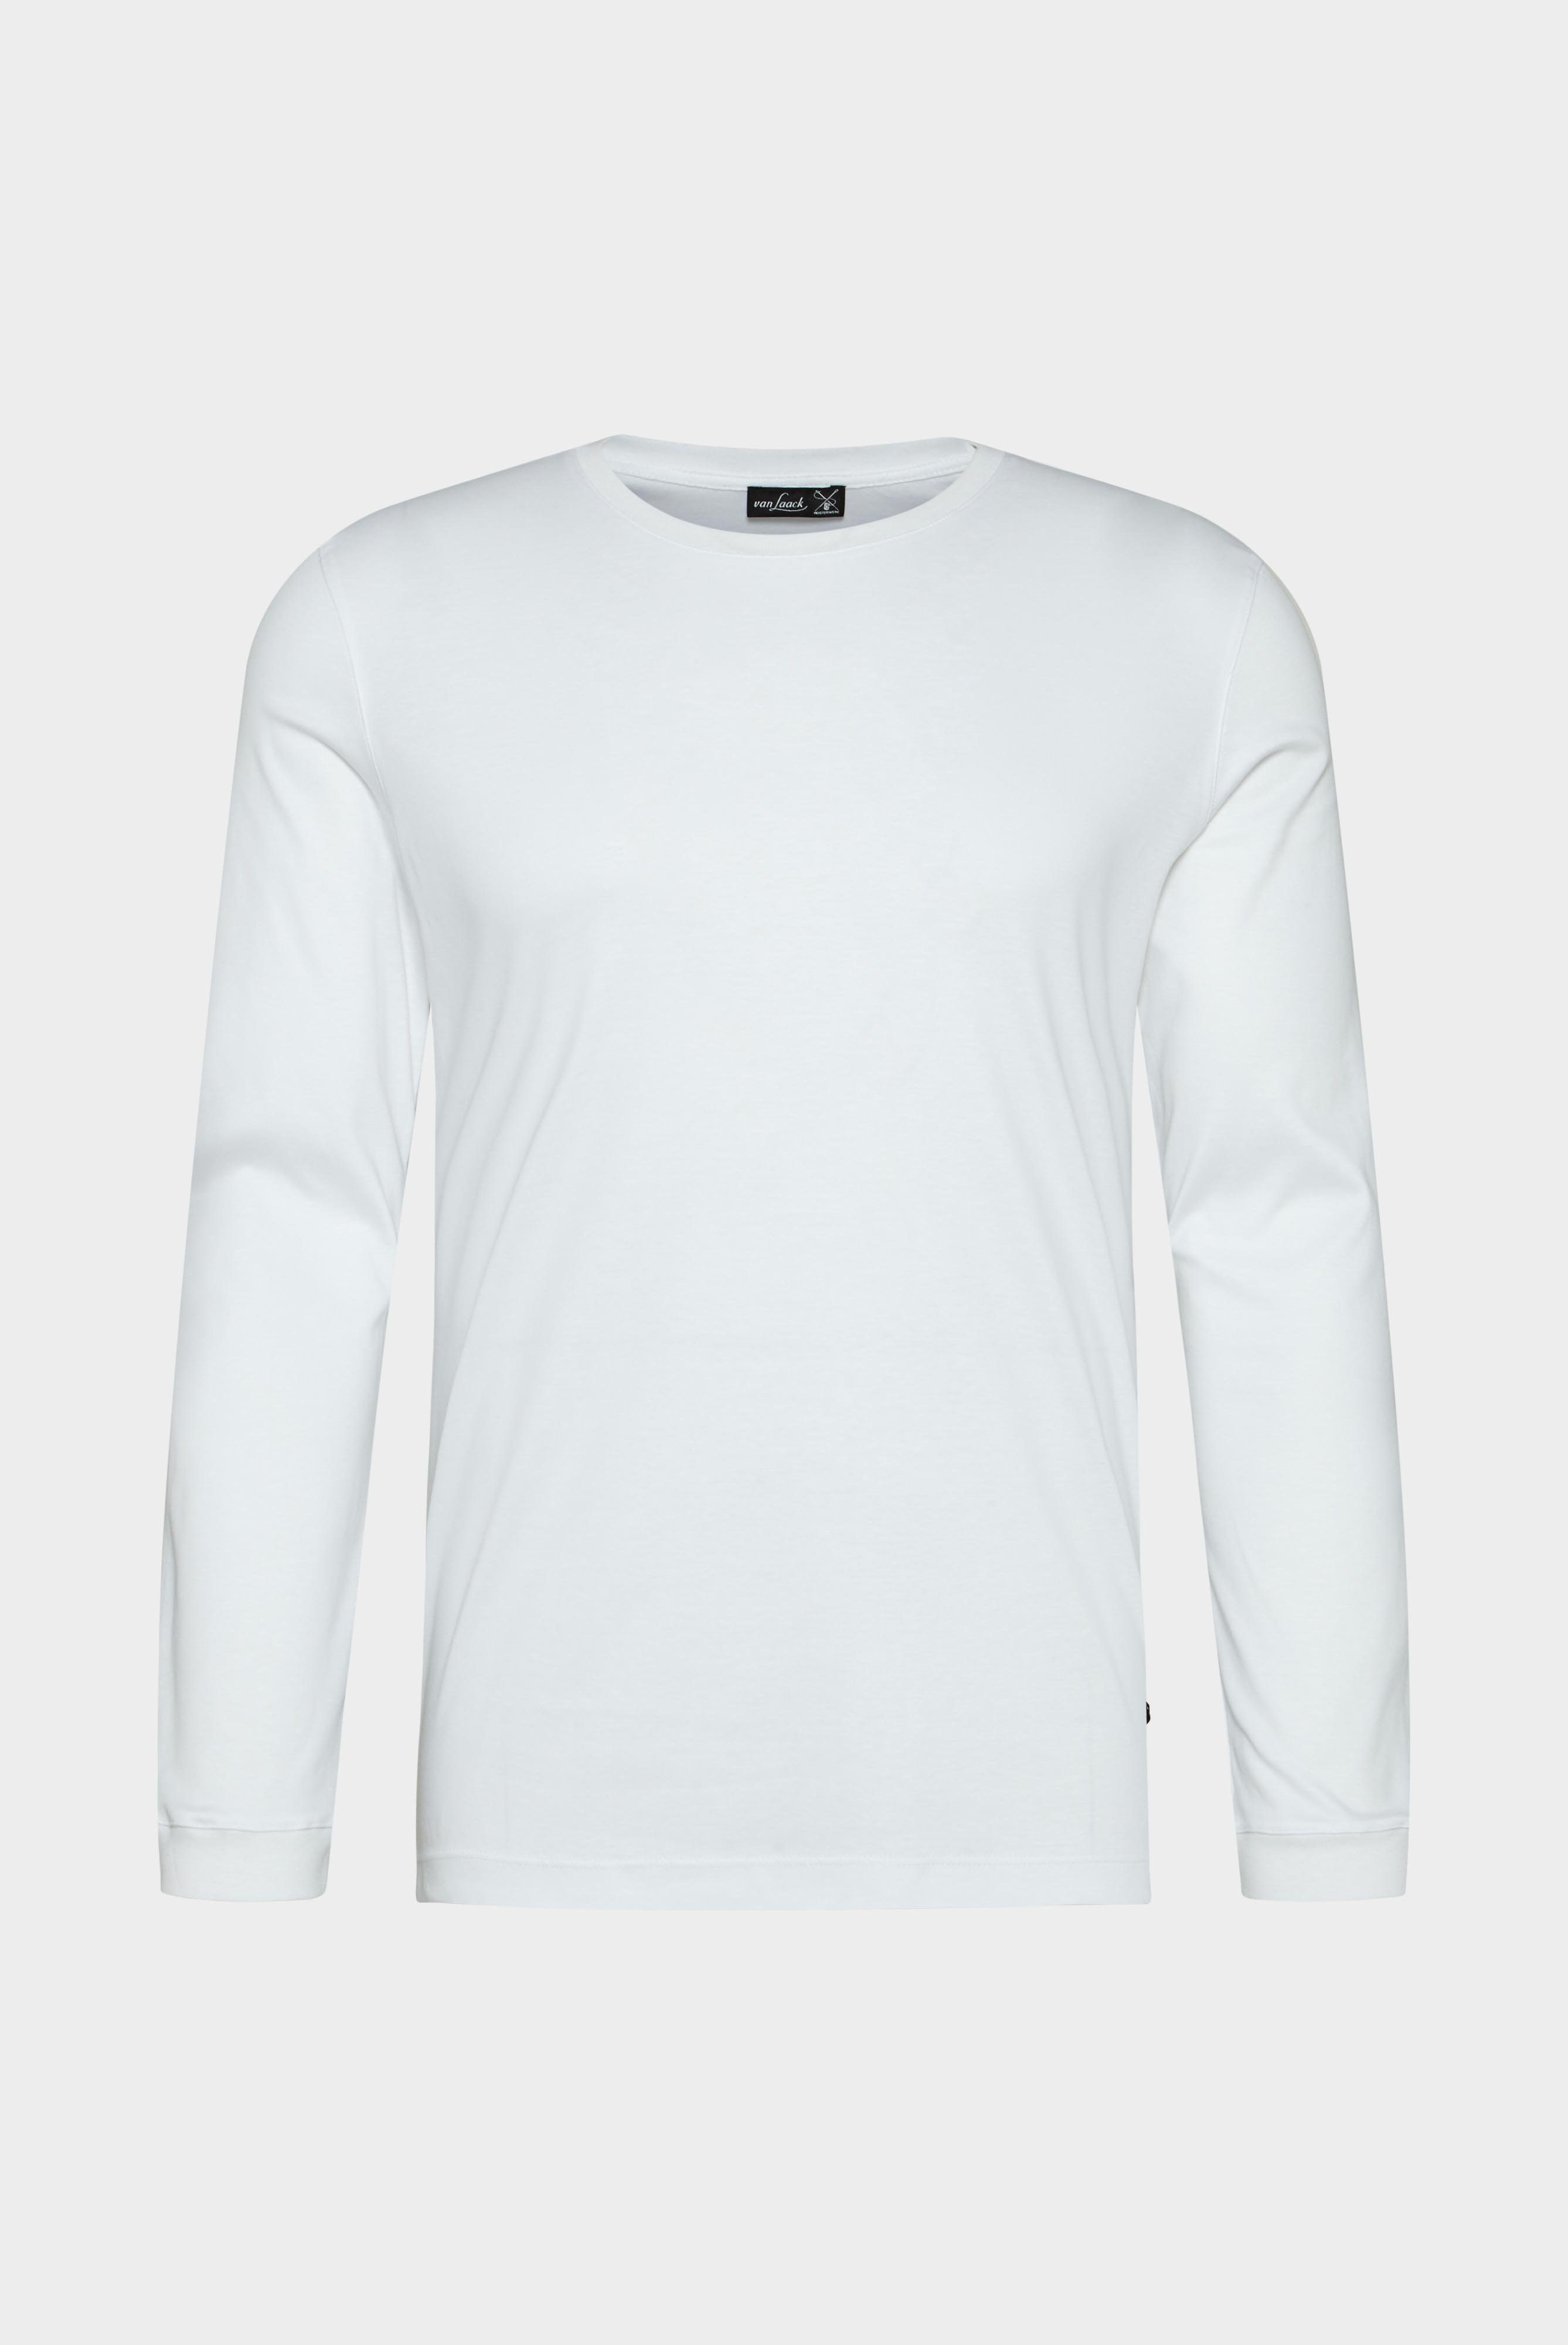 T-Shirts+Langarm Jersey T-Shirt mit Rundhals Slim Fit+20.1718.UX.180031.000.S